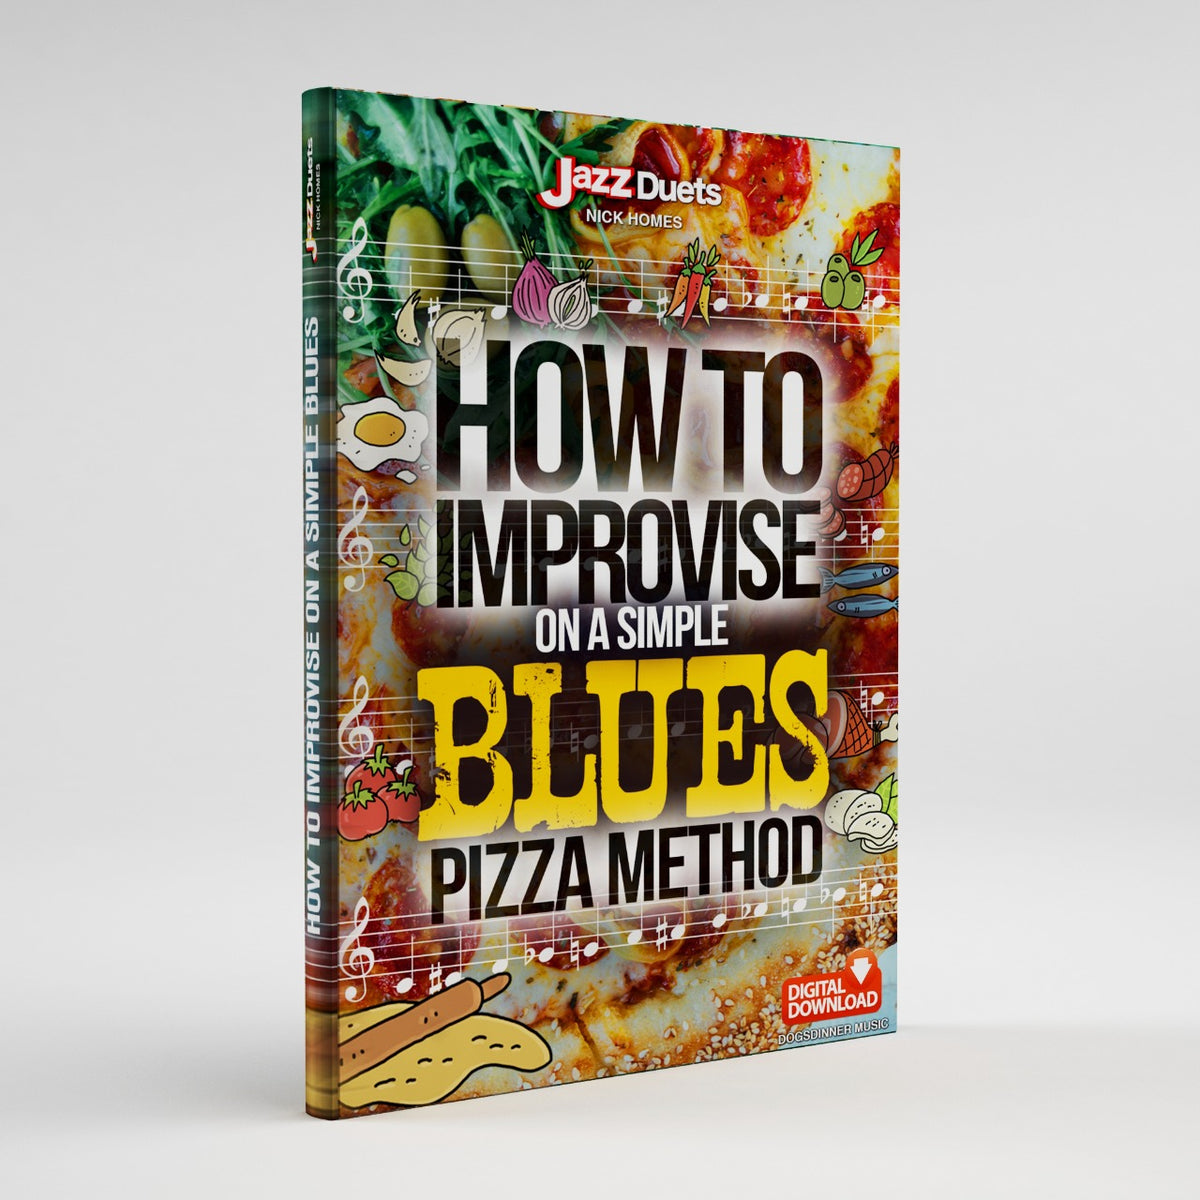 Pizza Blues method digital download